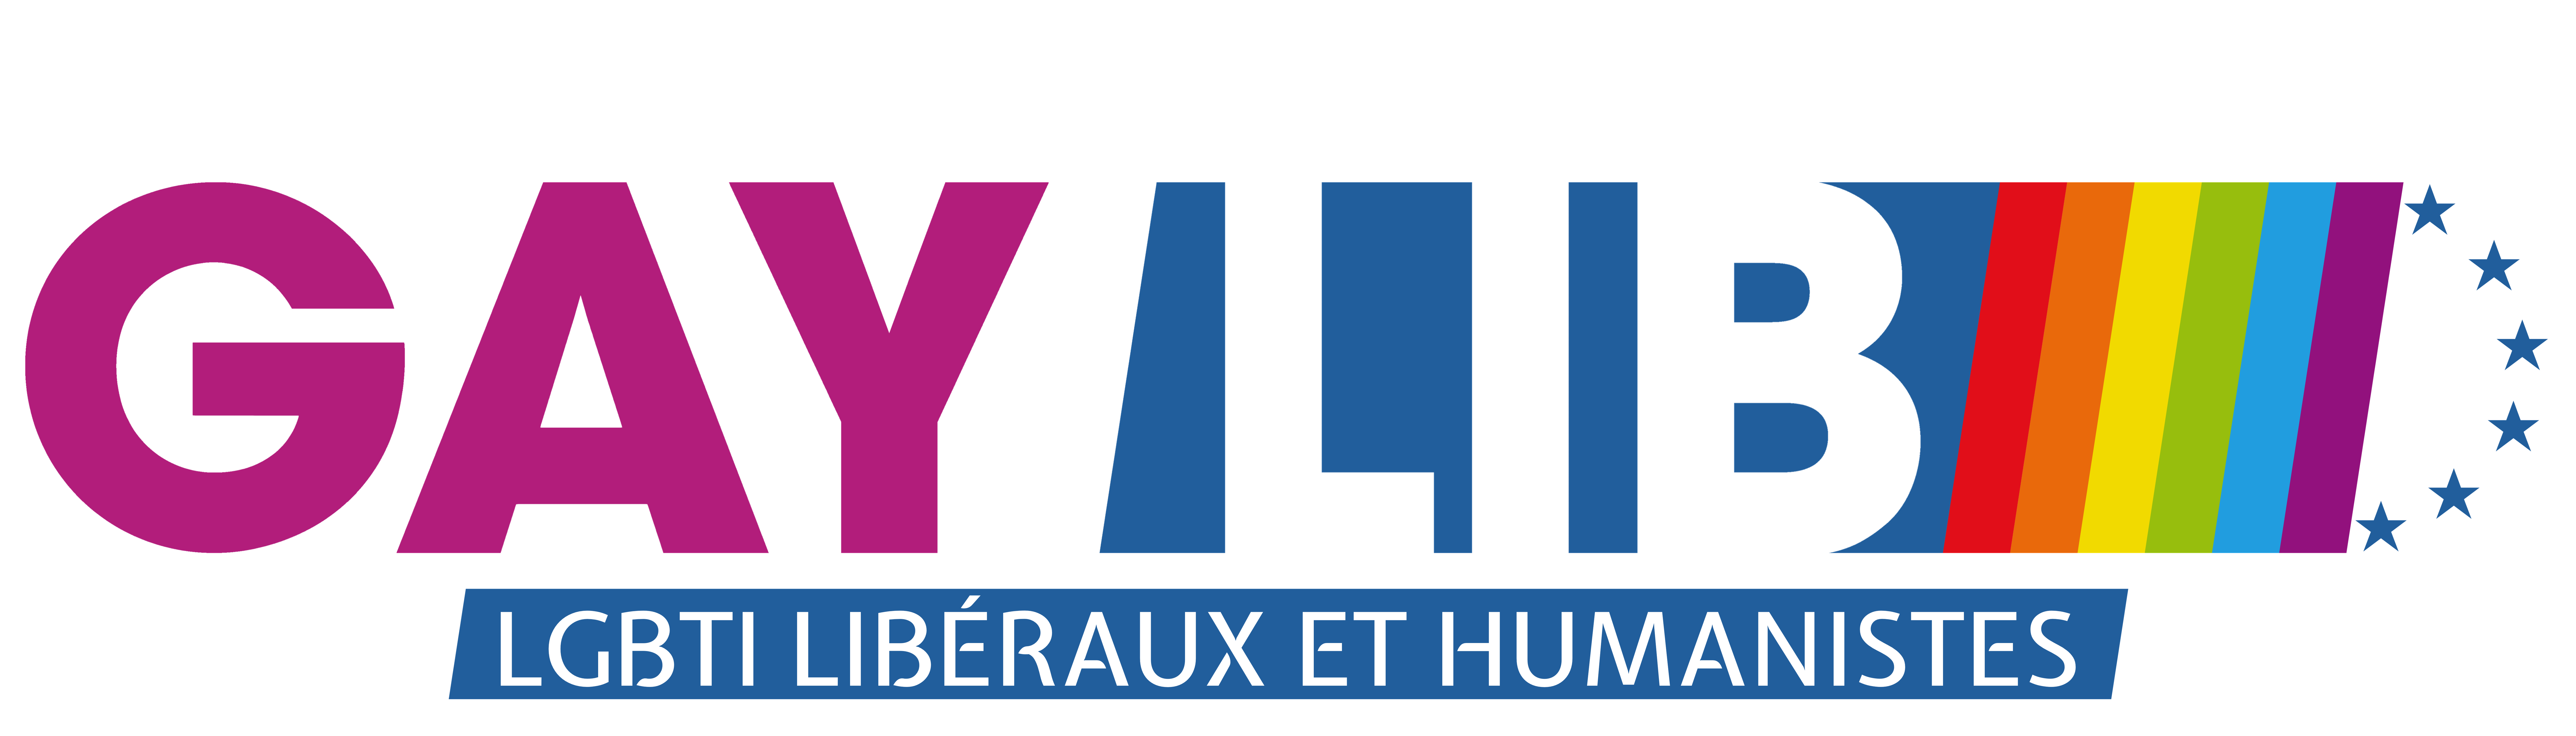 gay lib logo